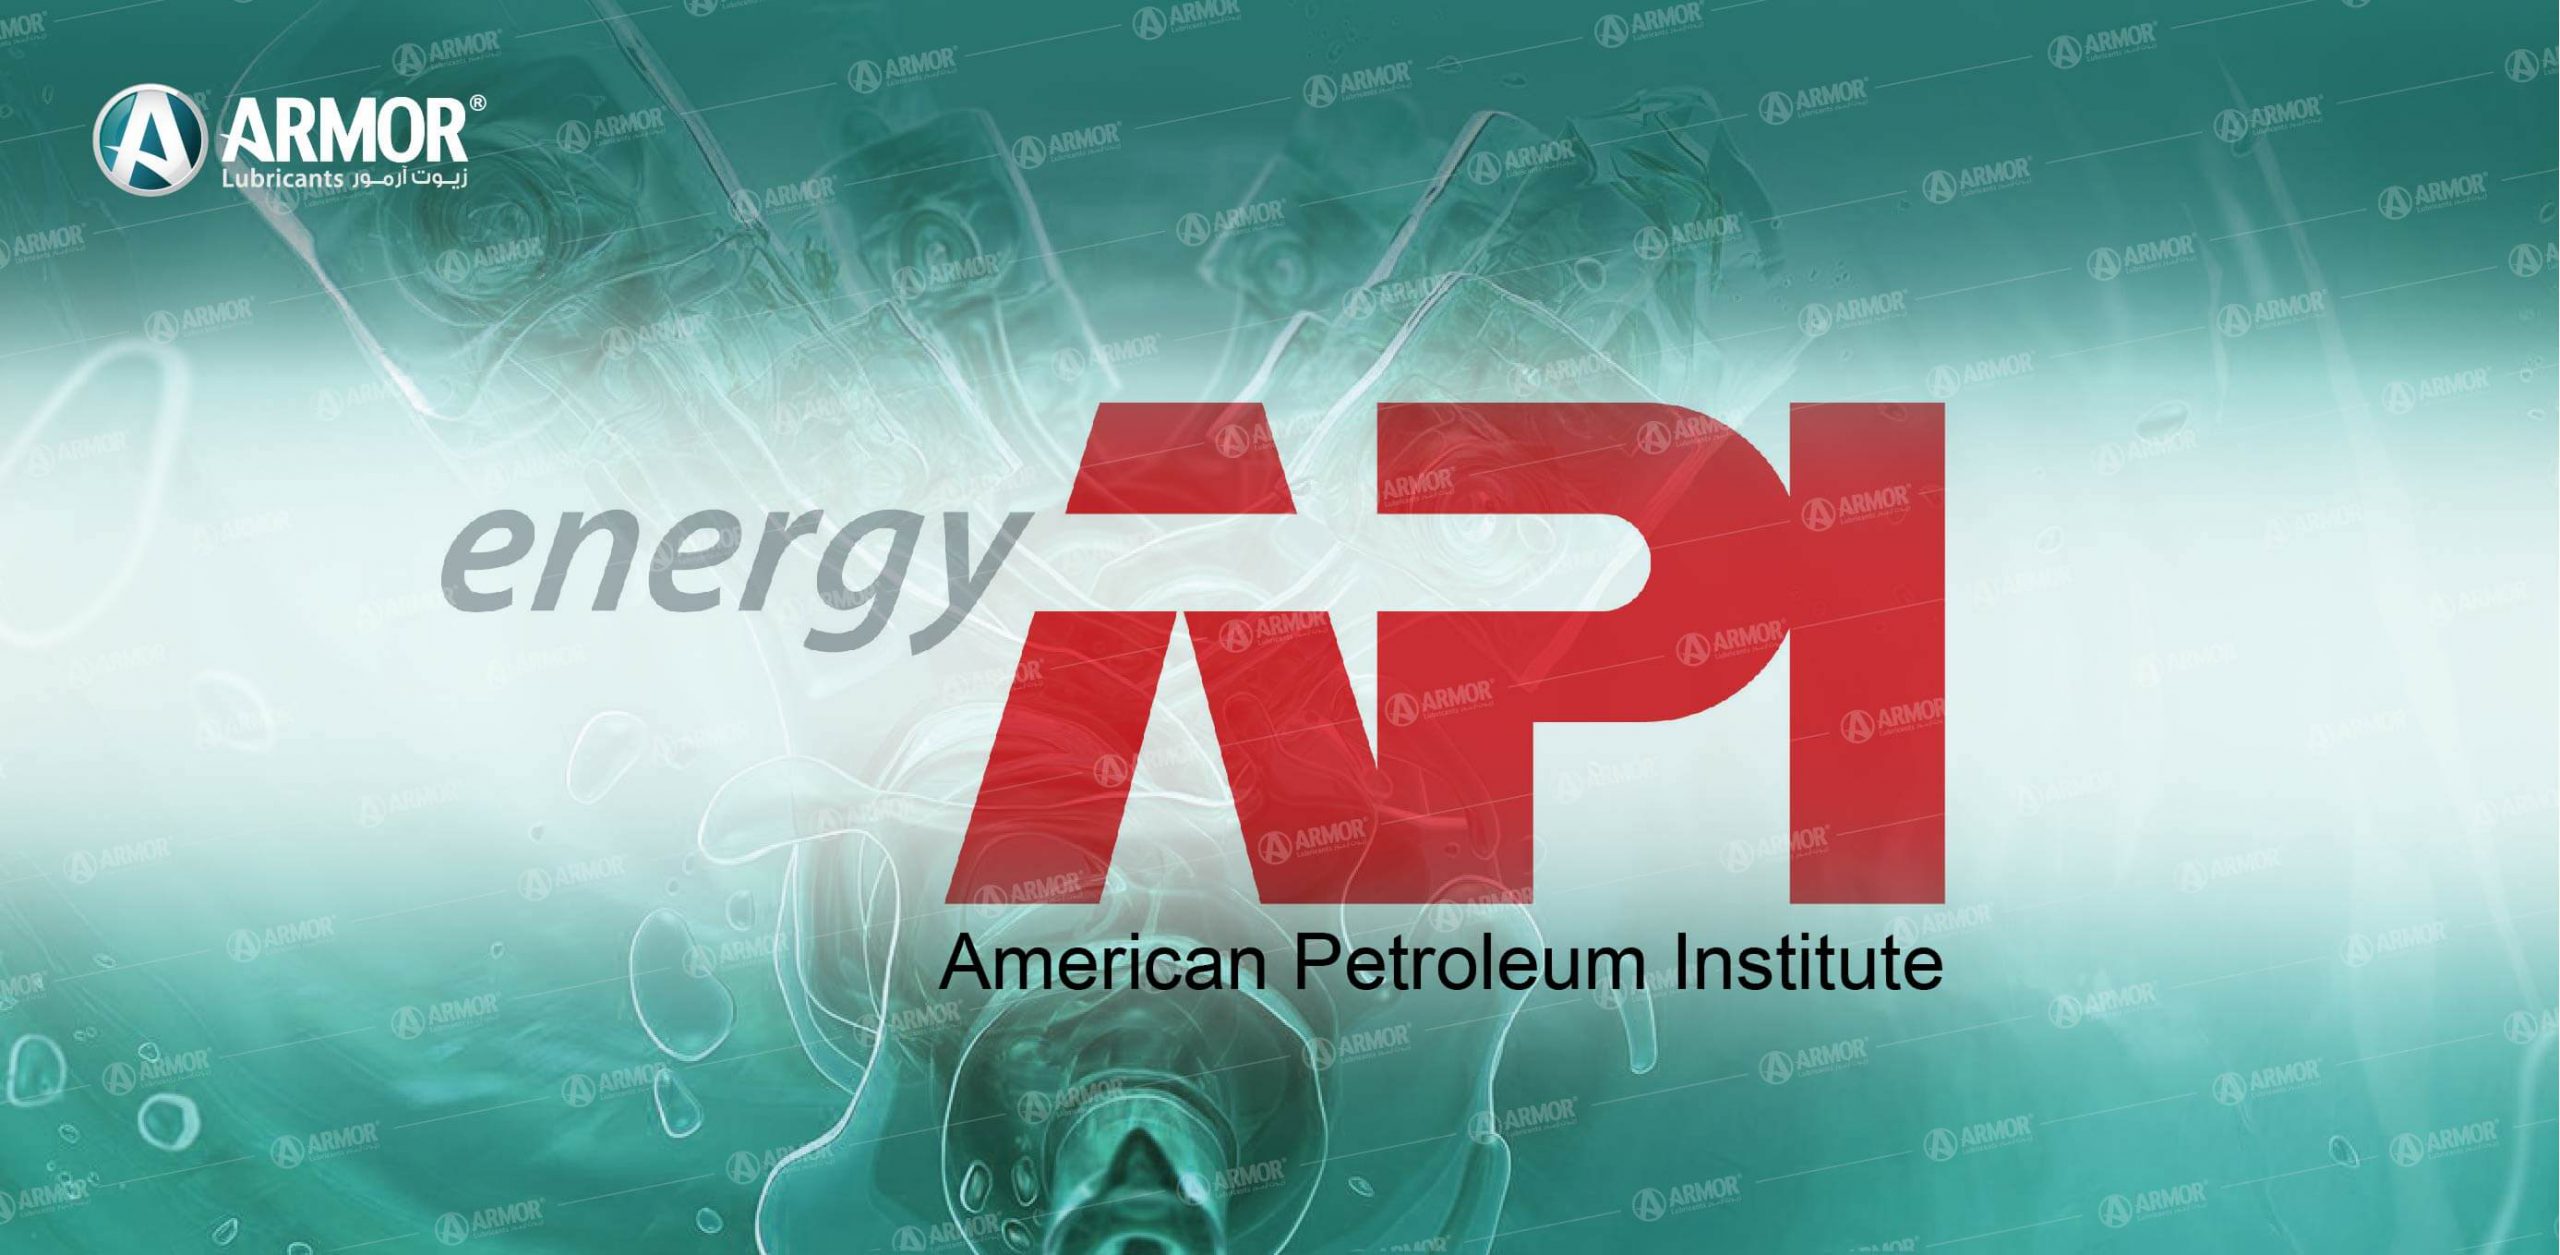 A Brief History Of The American Petroleum Institute (API)